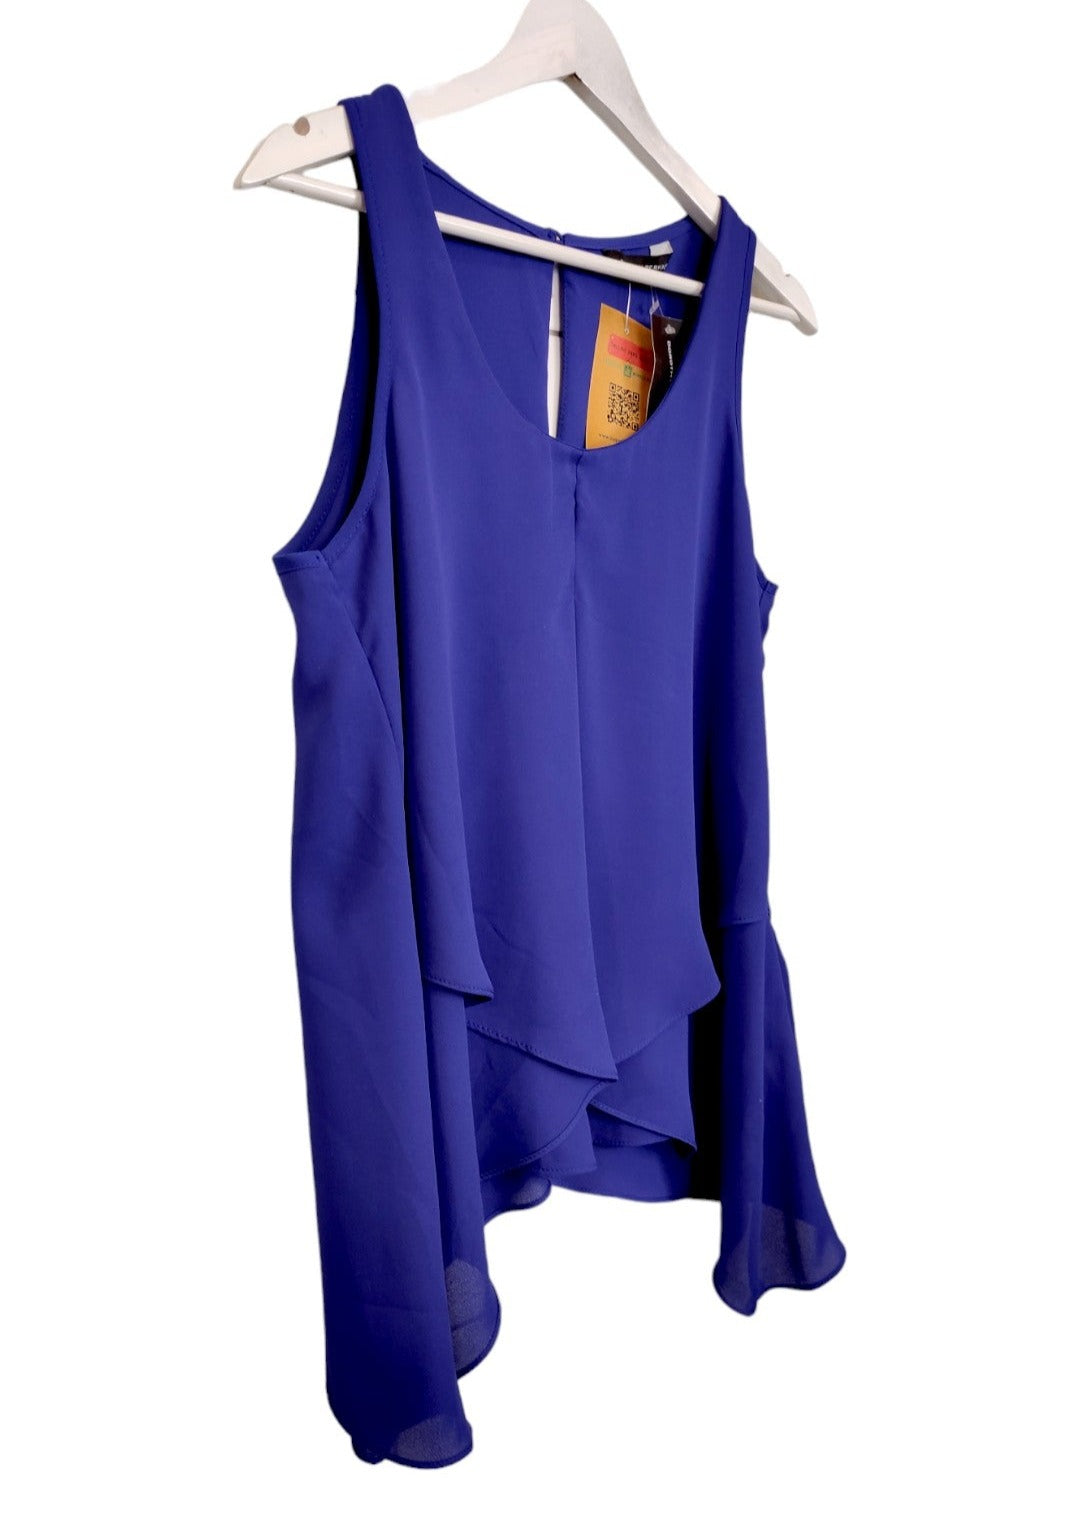 Stock, Αμάνικη Γυναικεία Μπλούζα DOROTHY PERKINS σε βαθύ Μπλε χρώμα (Small)